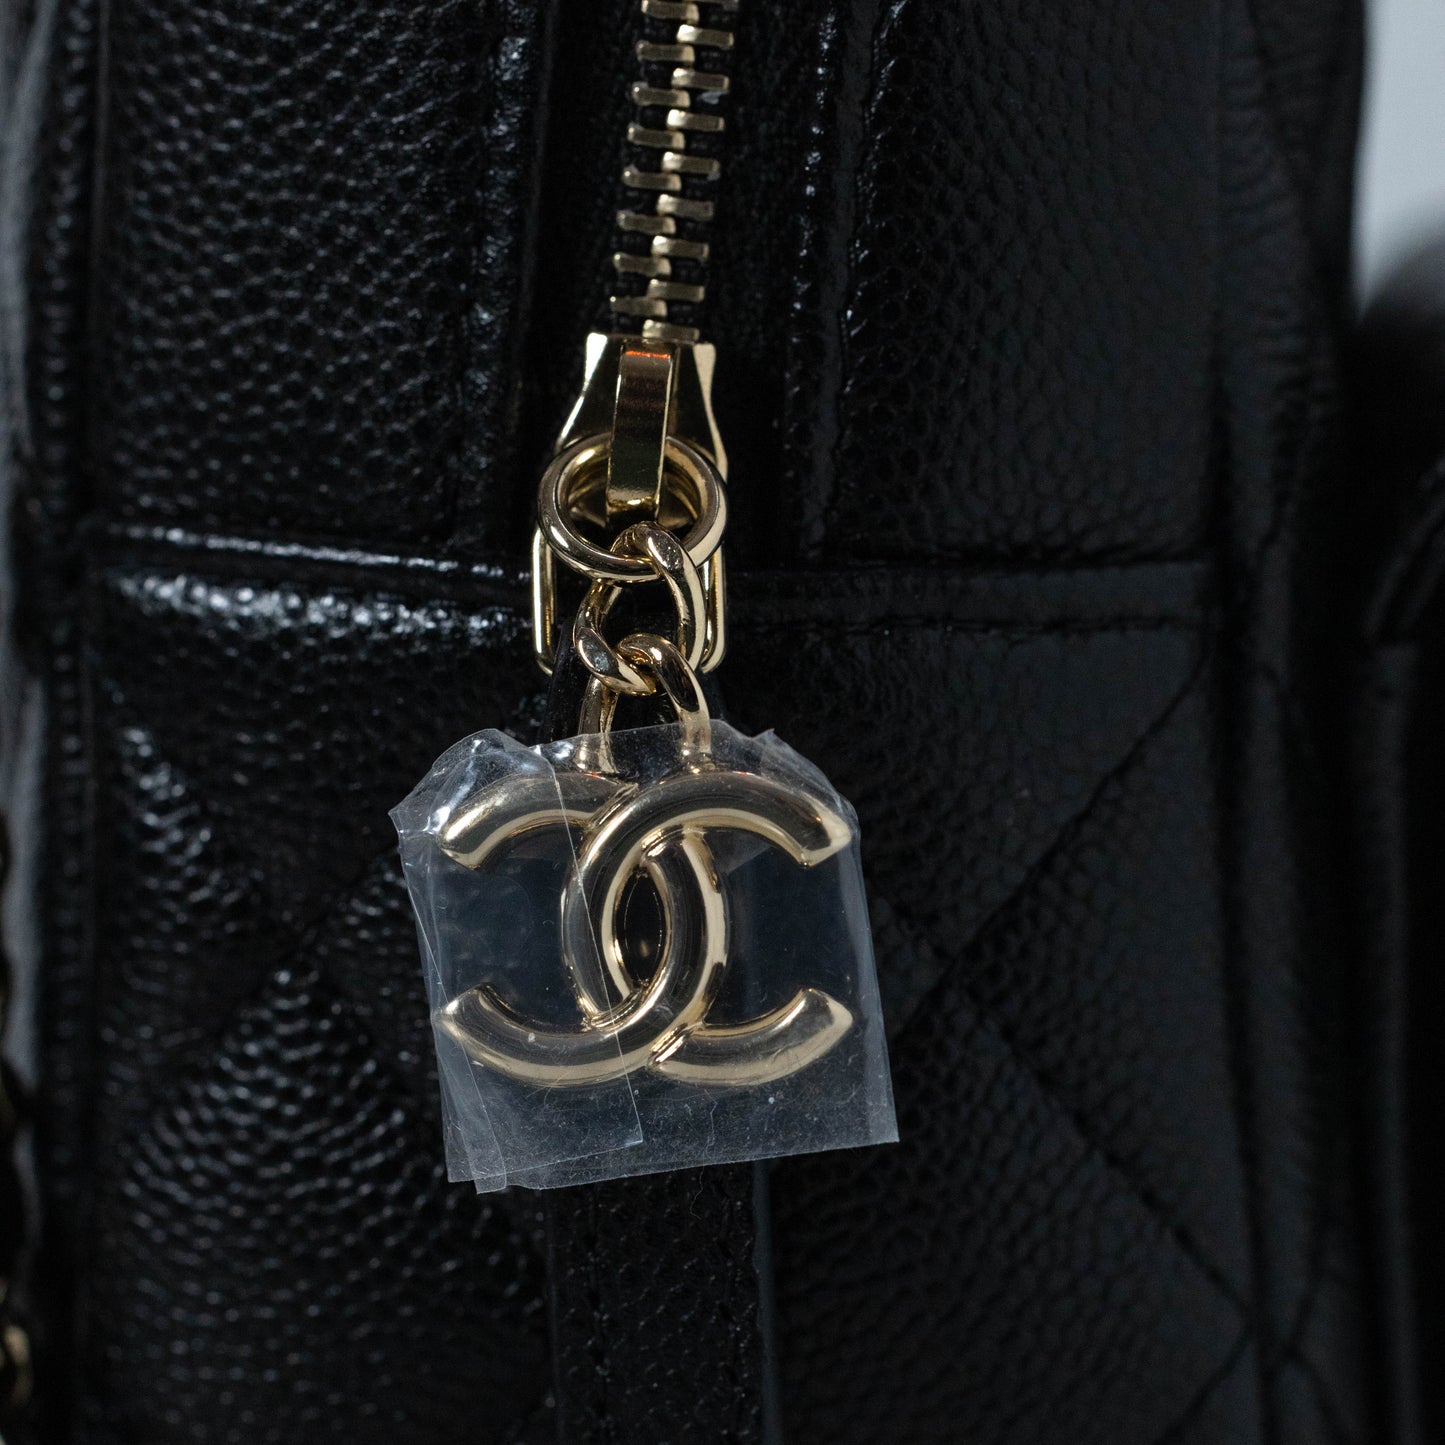 Chanel Backpack 24C